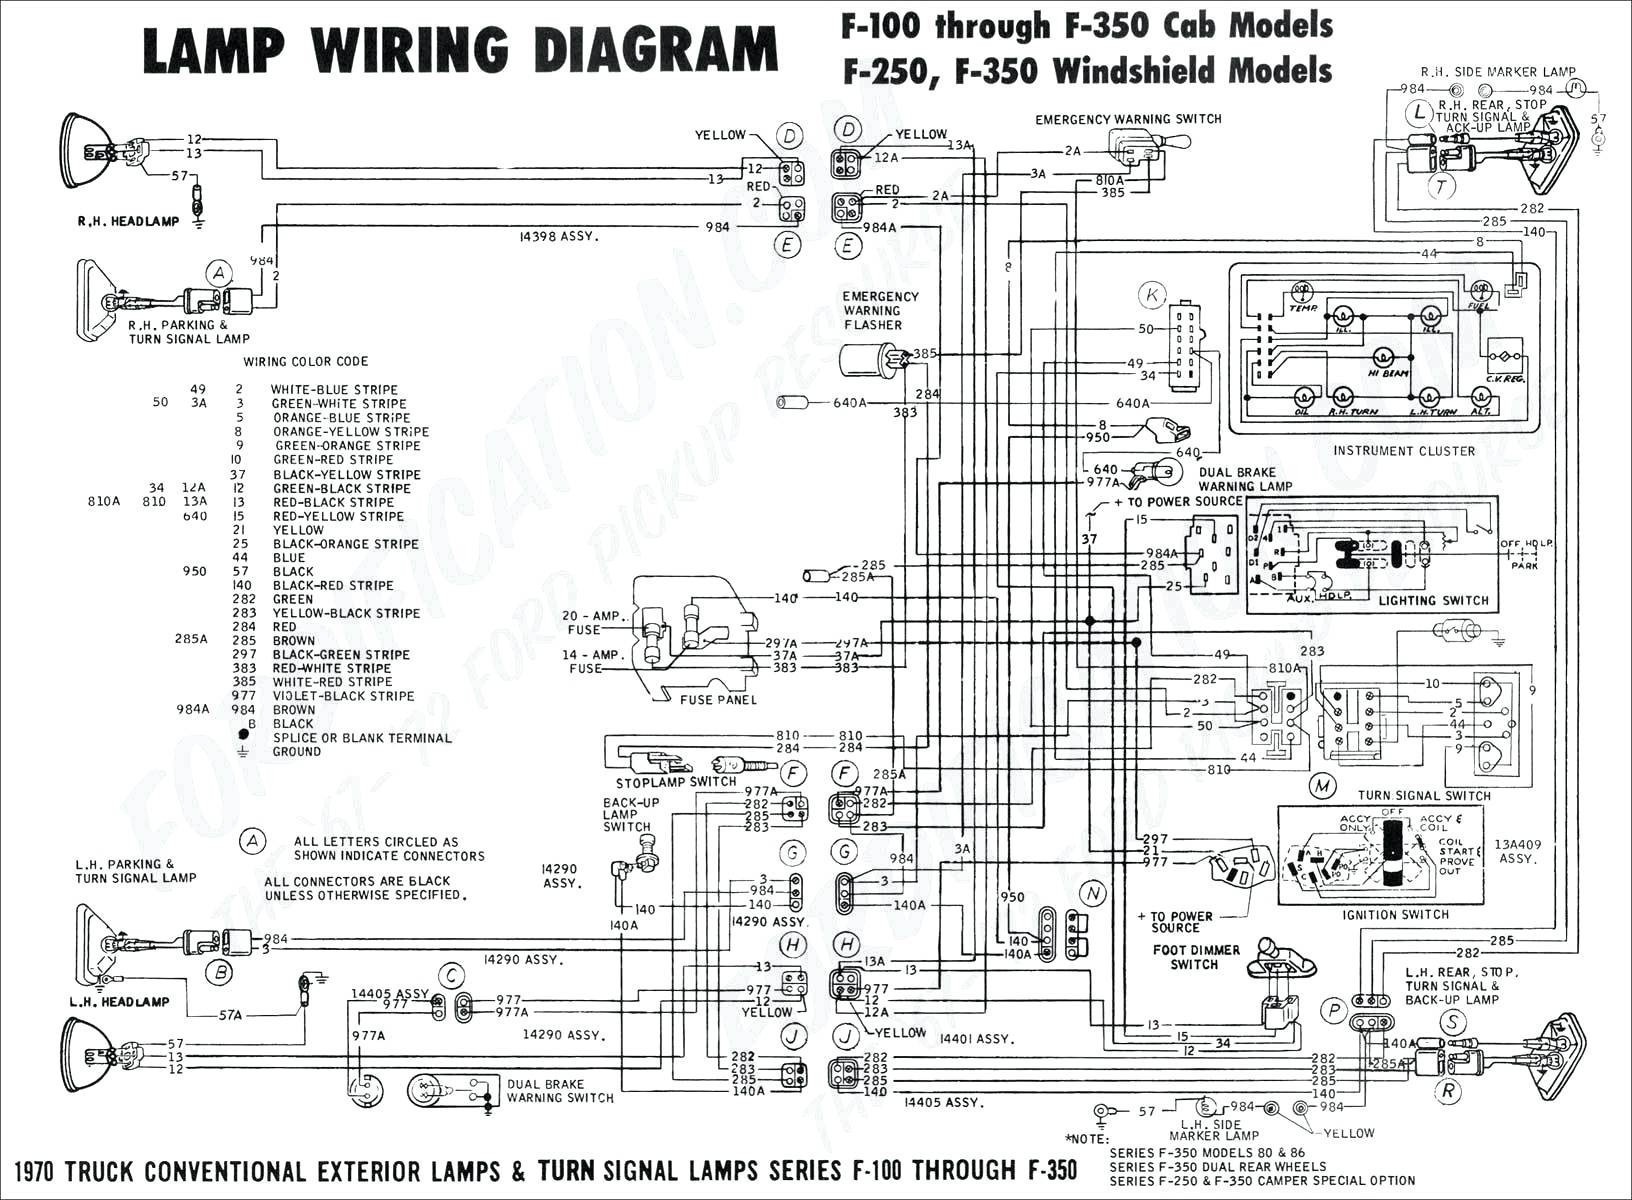 Ford F350 Parts Diagram 94 ford F350 Wiring Diagram Wiring Diagram Pass Of Ford F350 Parts Diagram